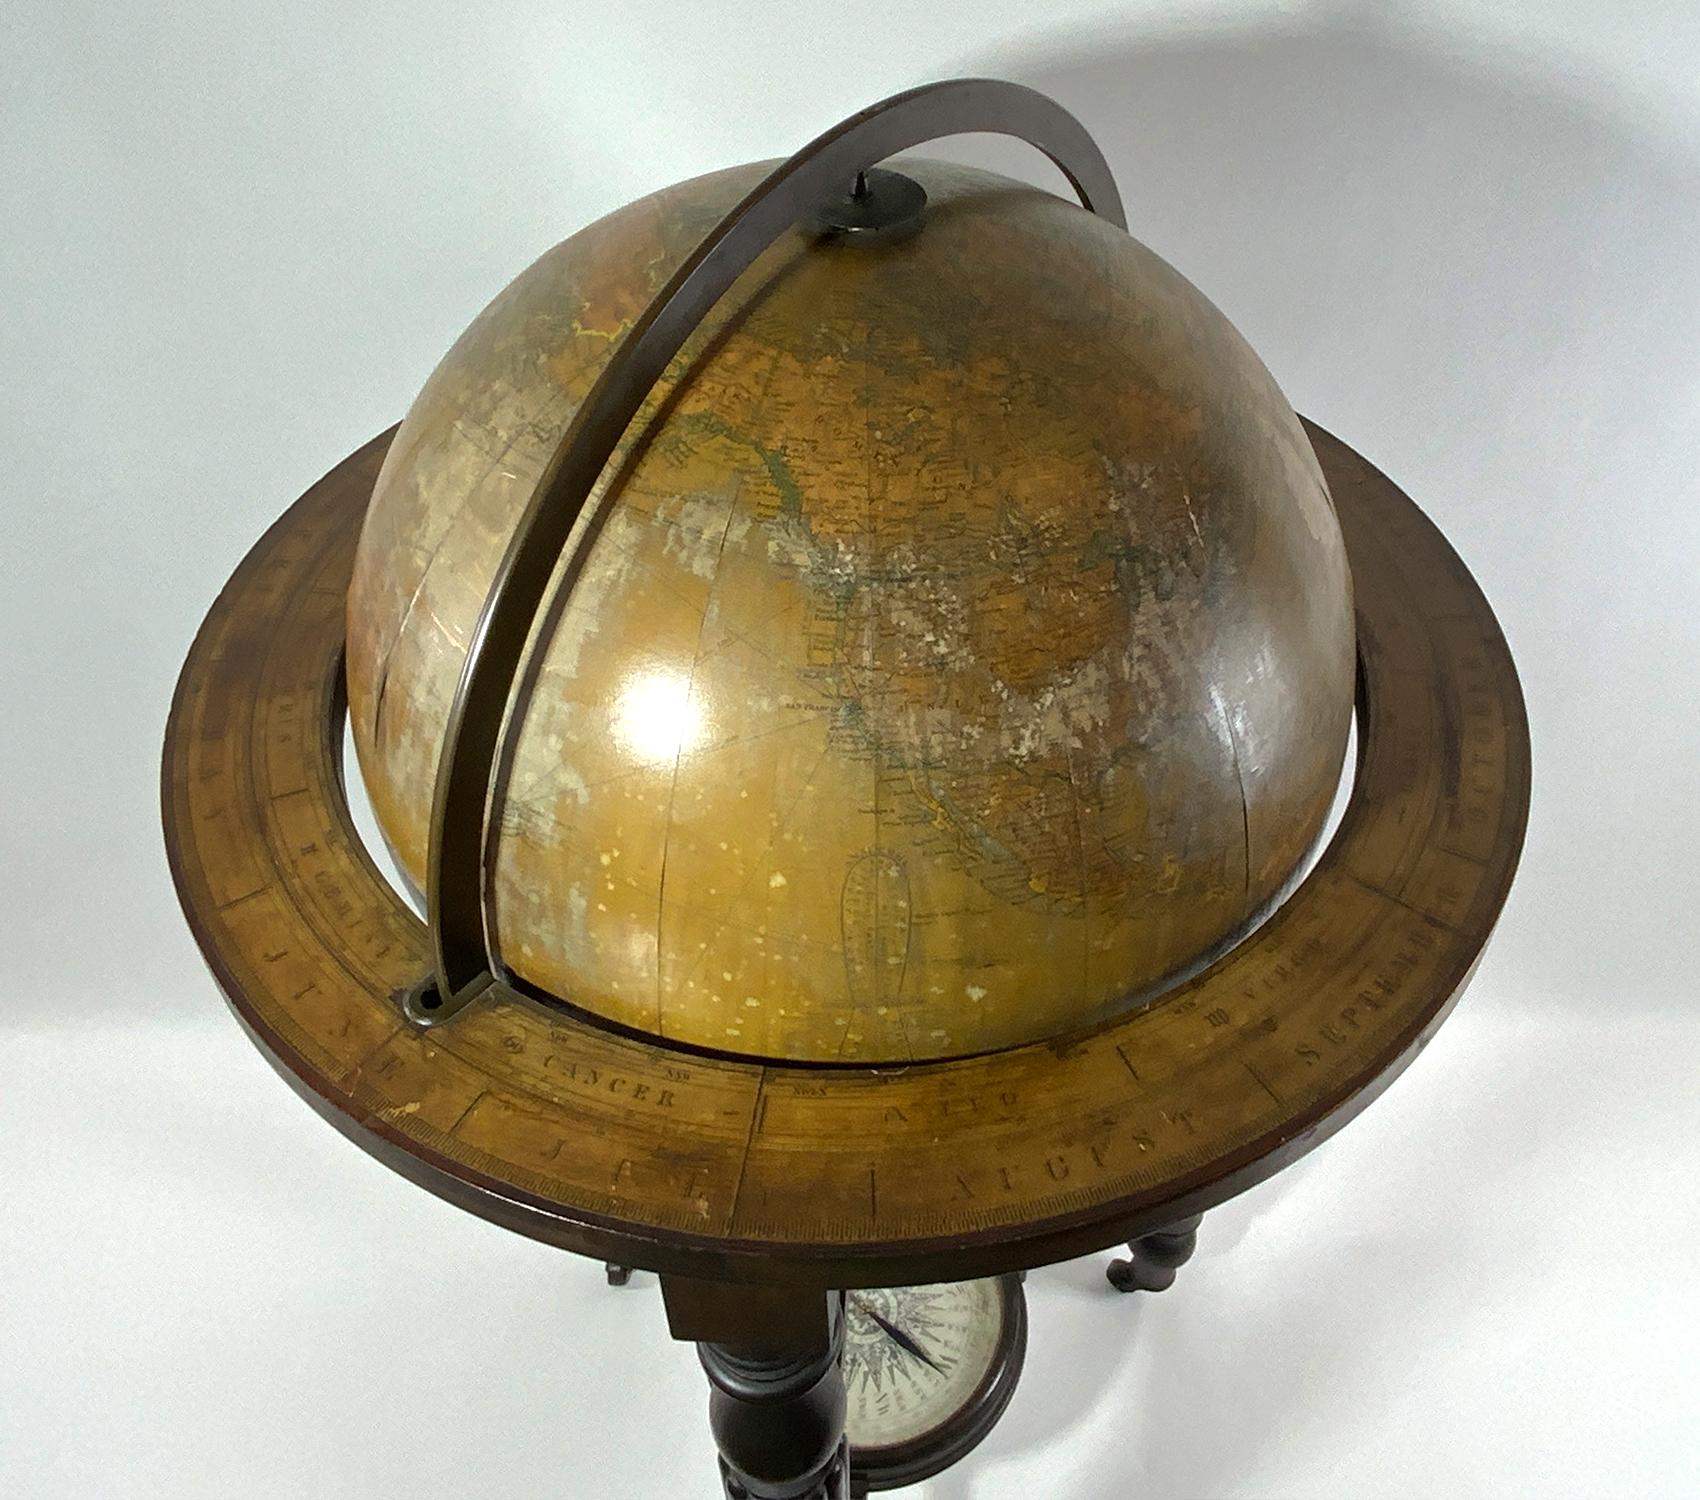 Philips Merchant Shipper's Globe, London 5